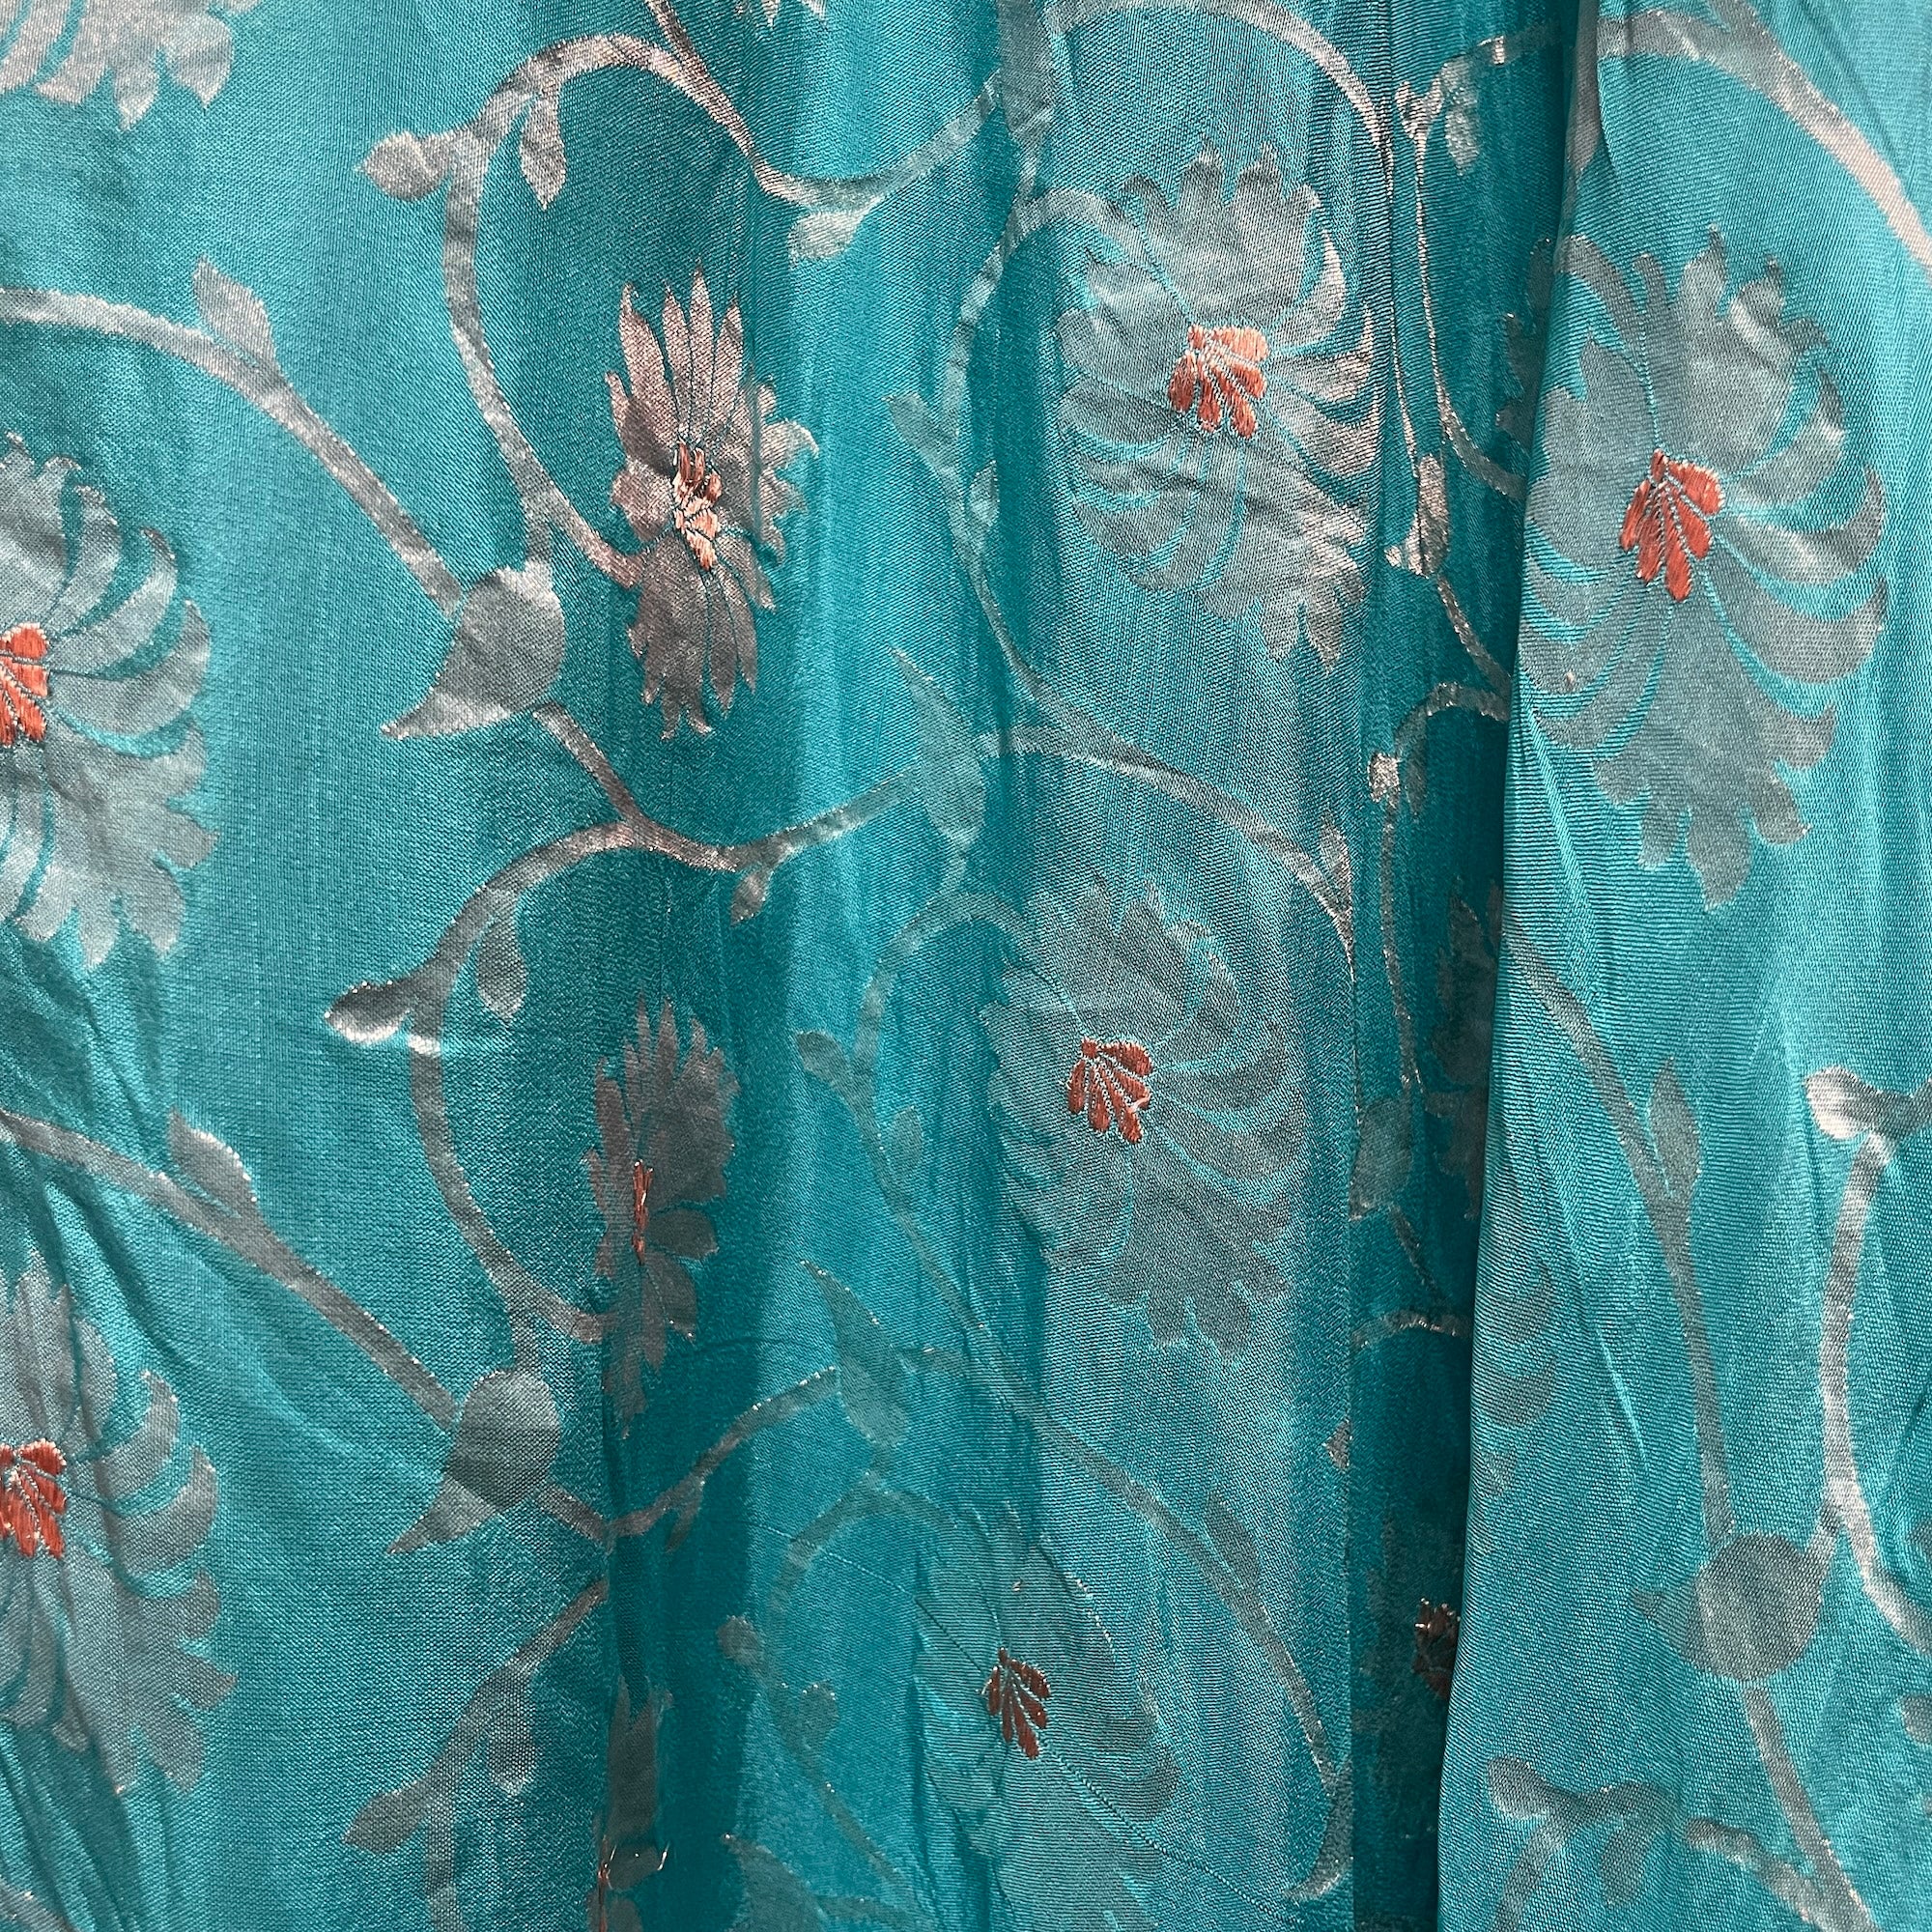 Handmade Turquoise Brocade Silk Sharara Pants - Vintage India NYC